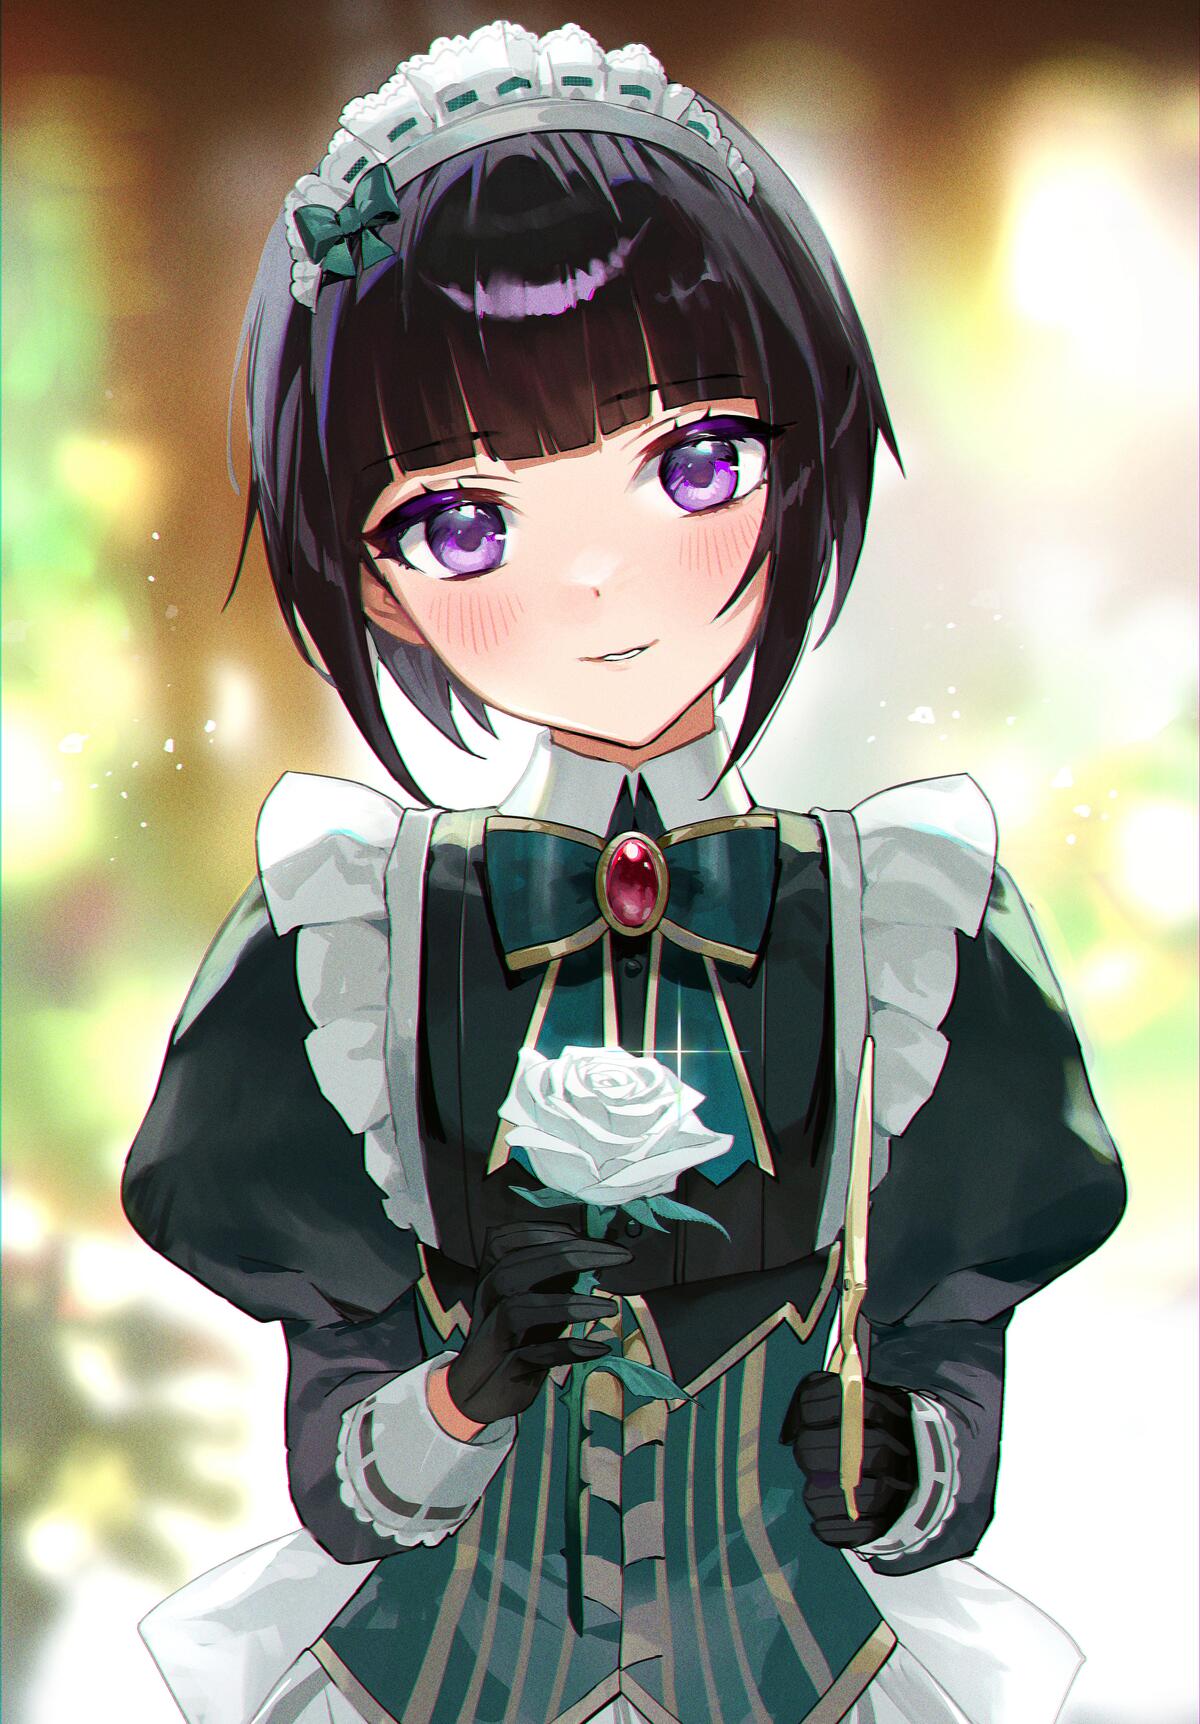 Anime girl with purple eyes.